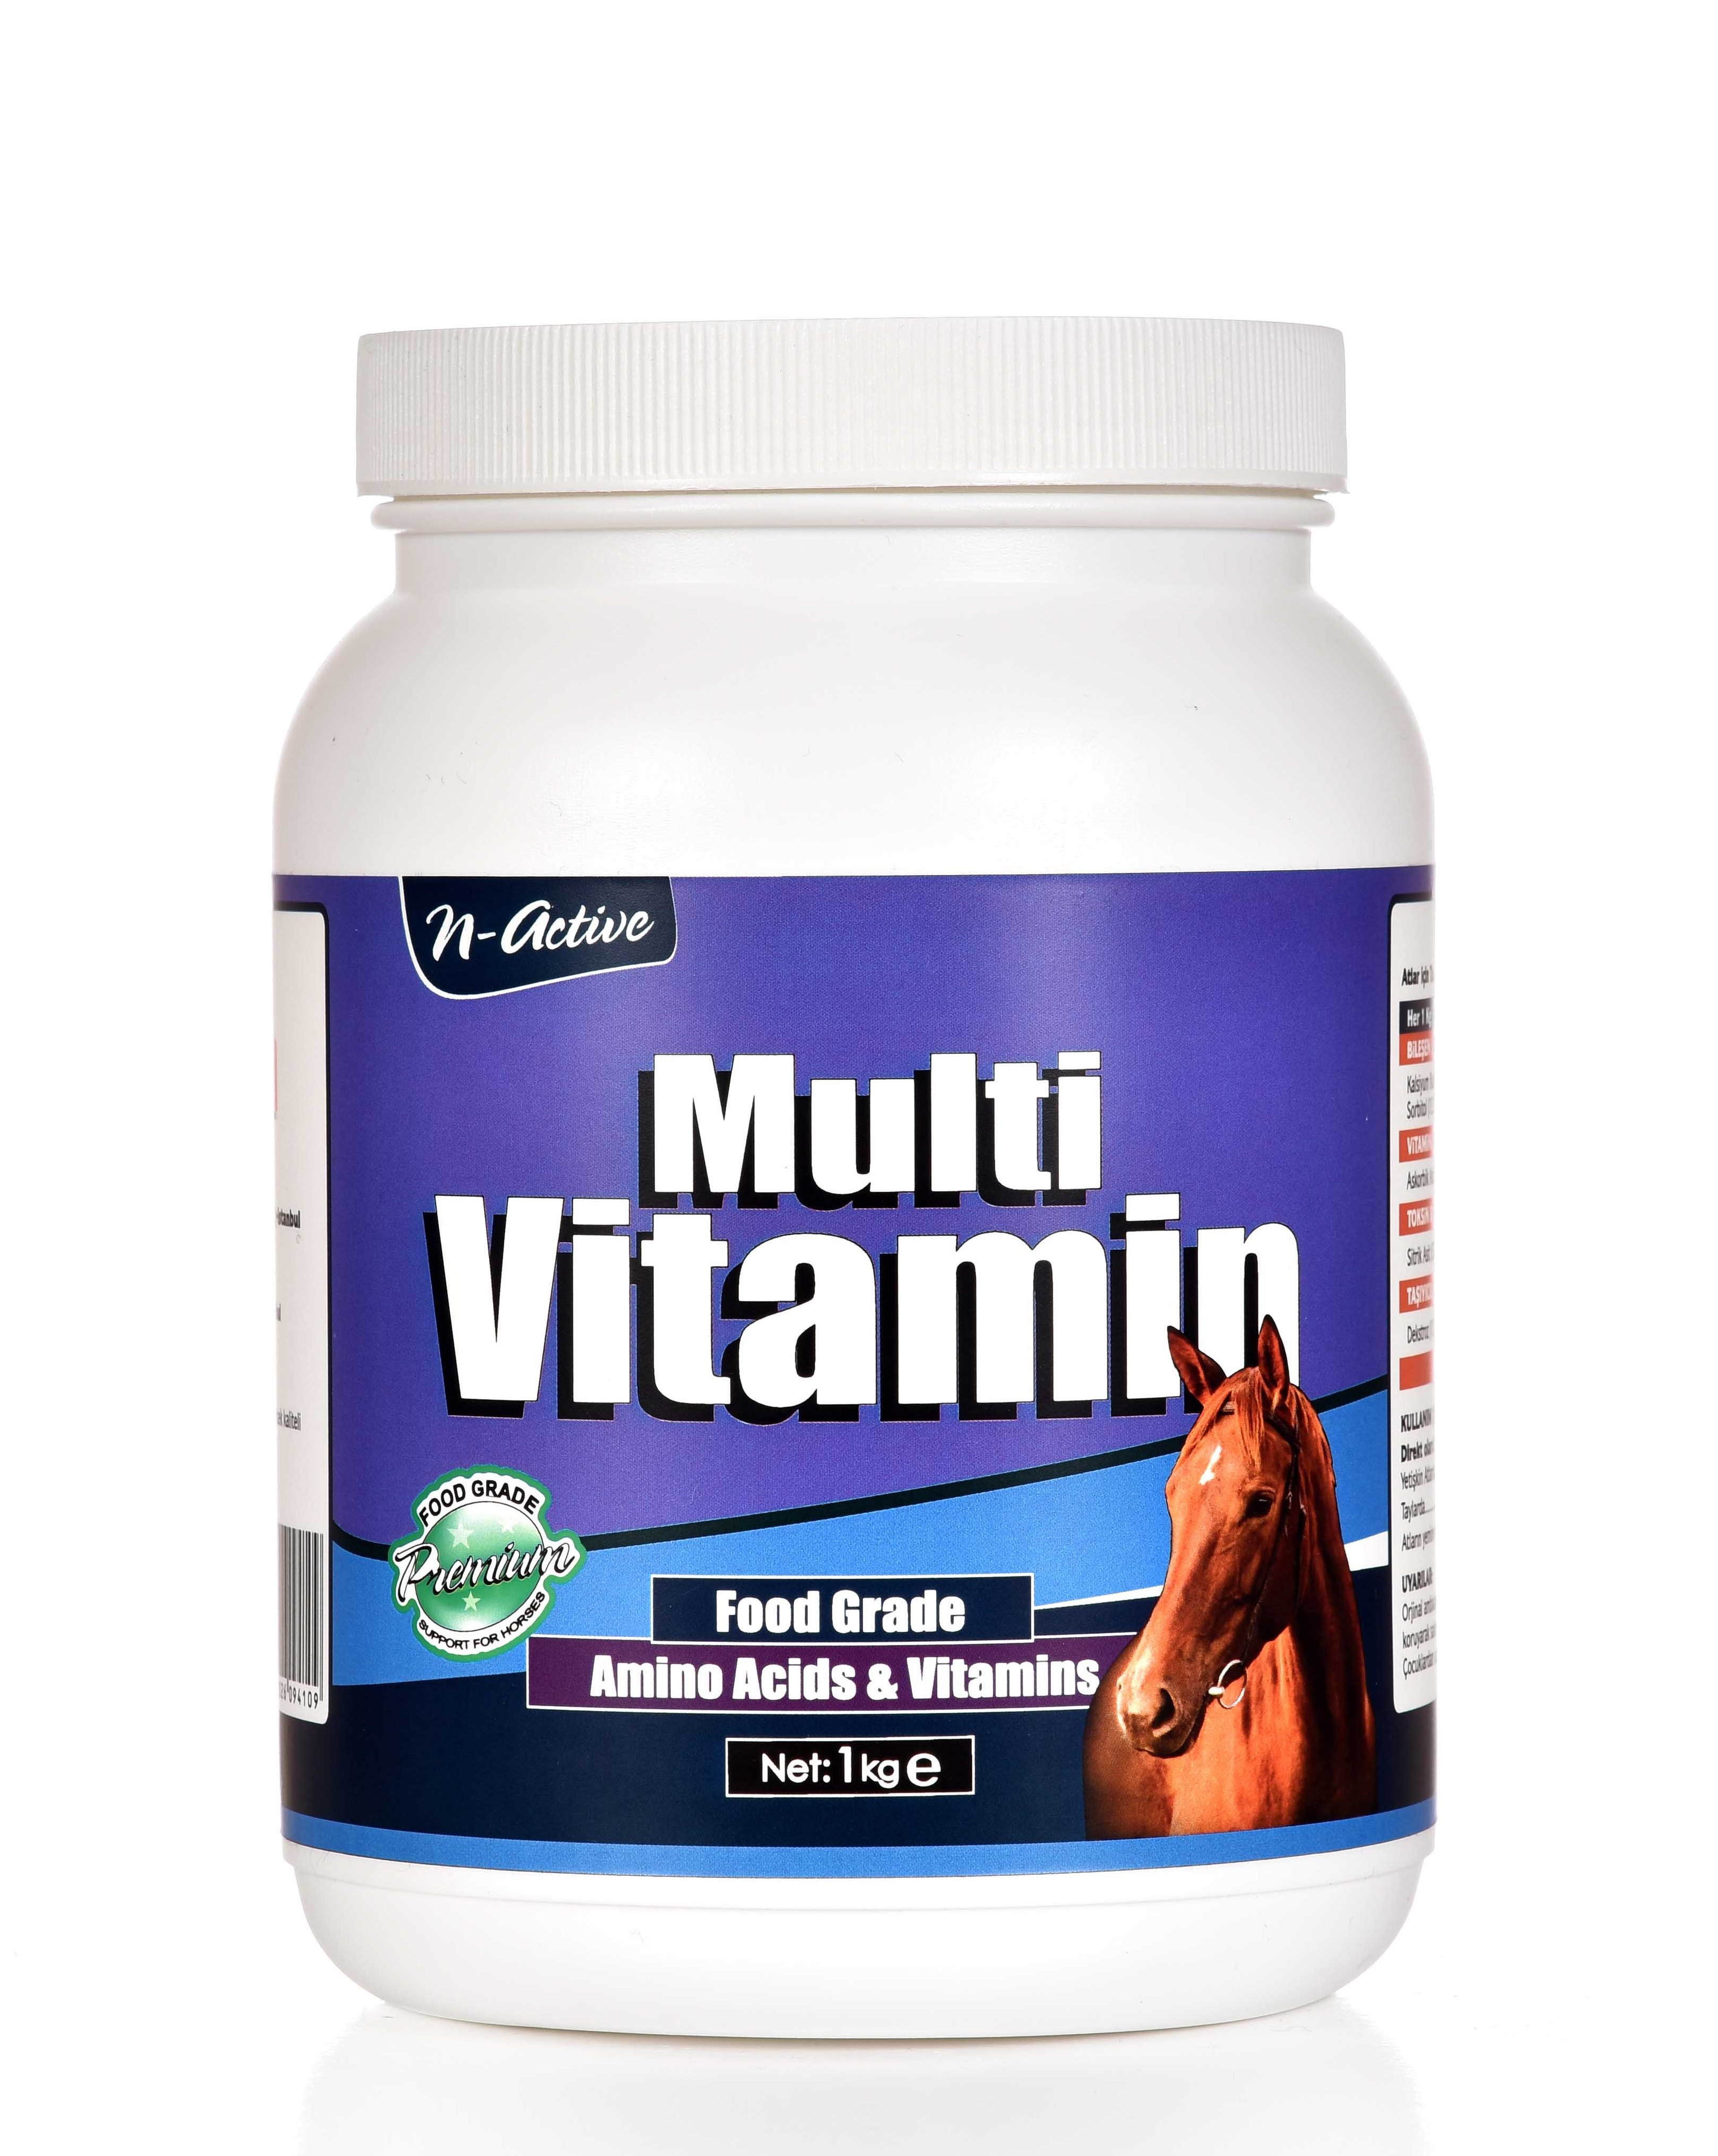 N active. Мультивитамин Актив. Витамины Мульти 1. Мультивитамины Active. Мультивитамины Multi Forte.